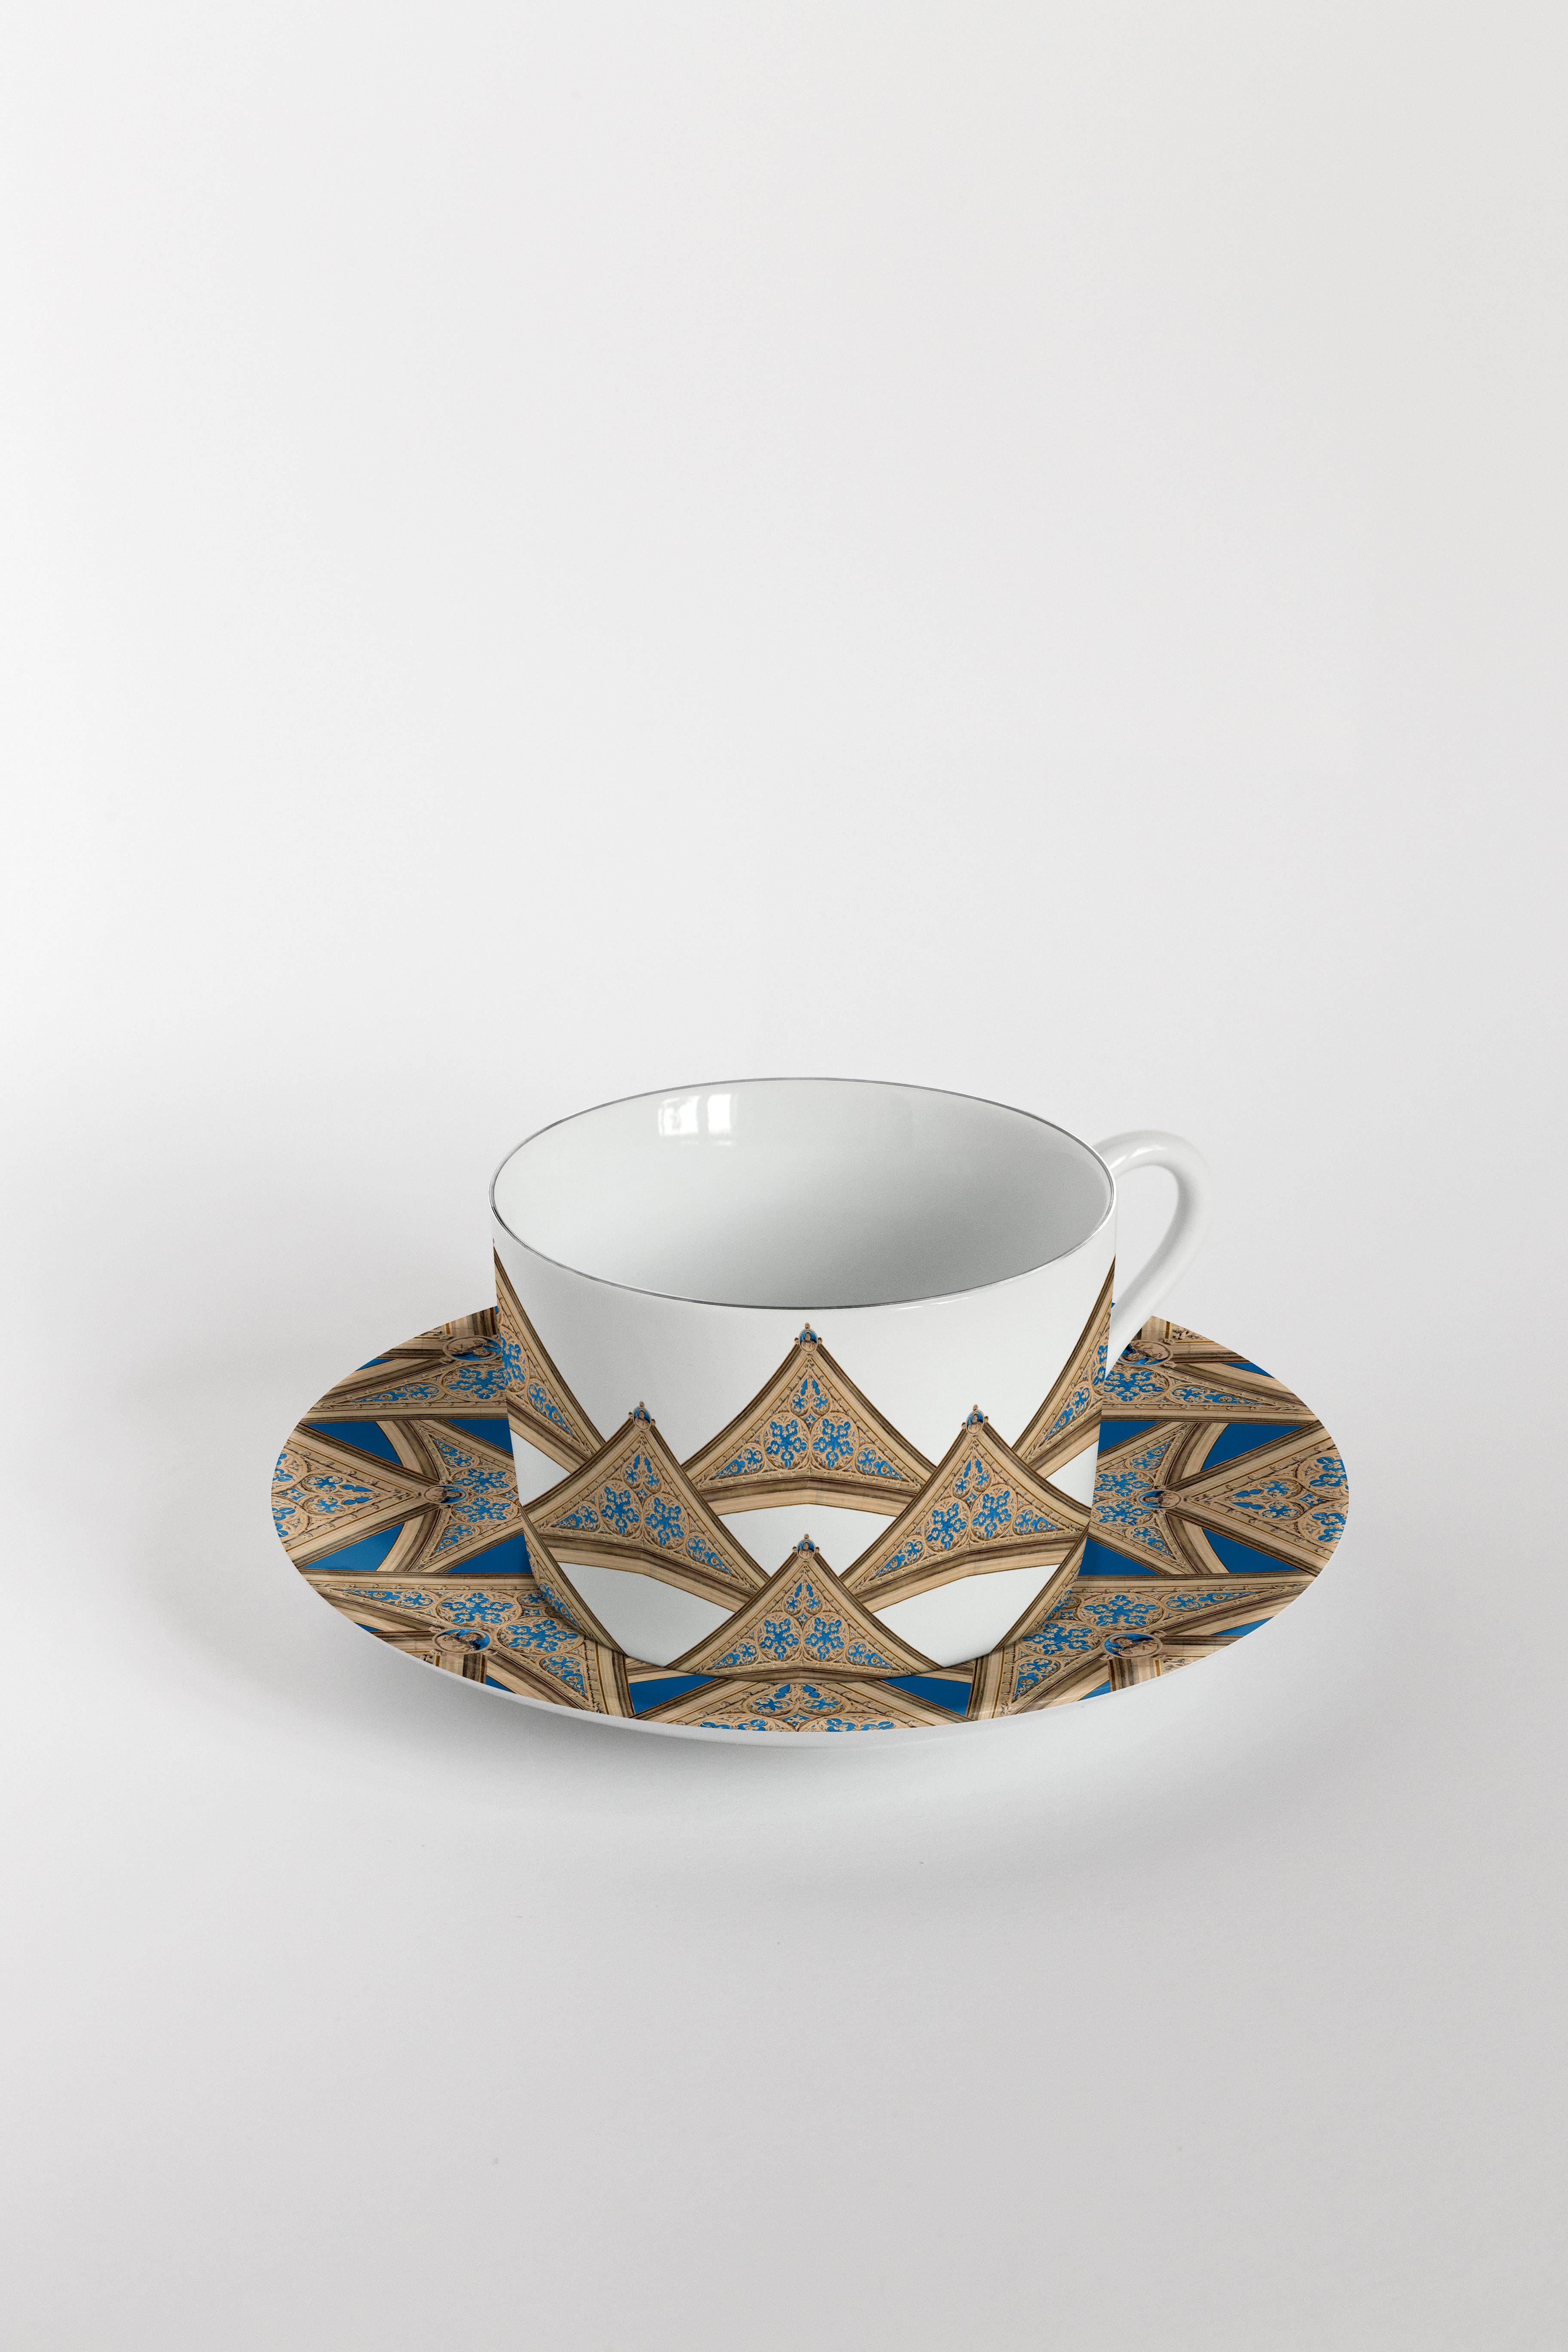 Porcelain Le Volte Celesti, Six Contemporary Decorated Tea Cups with Plates For Sale